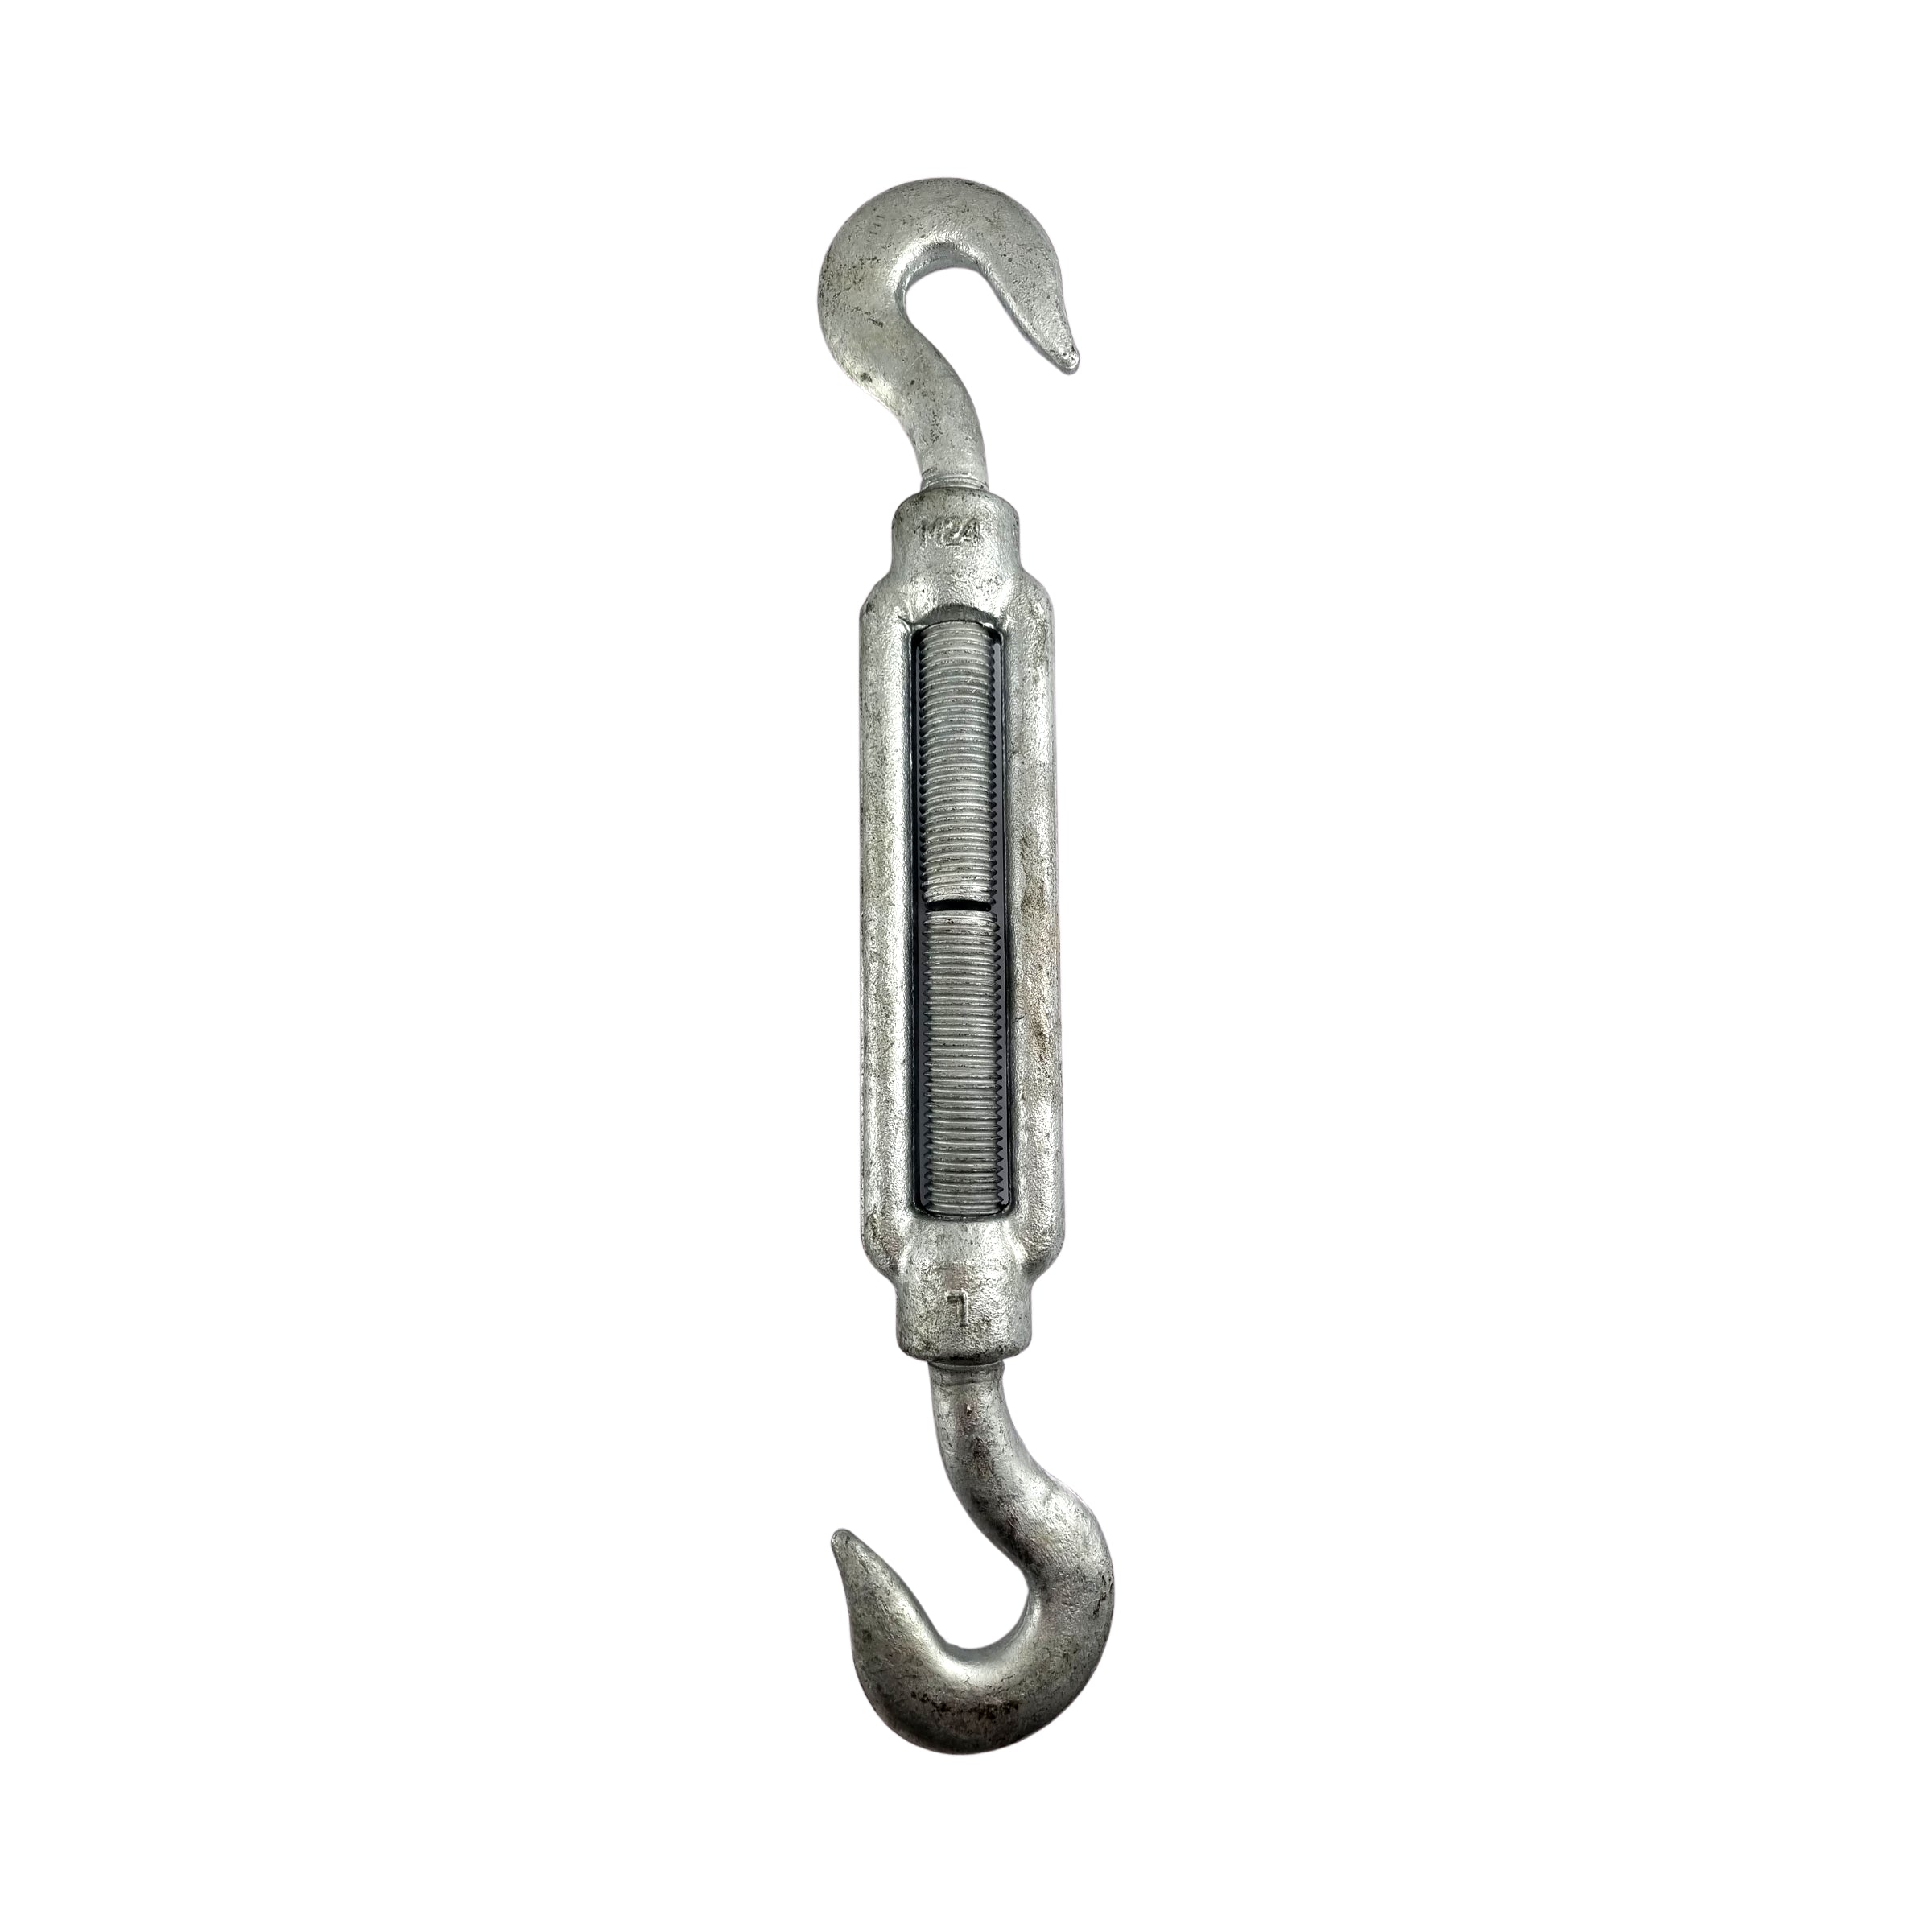 Turnbuckles - Galvanised - Hook-Hook. Various sizes: 5mm up to 24mm. Australia